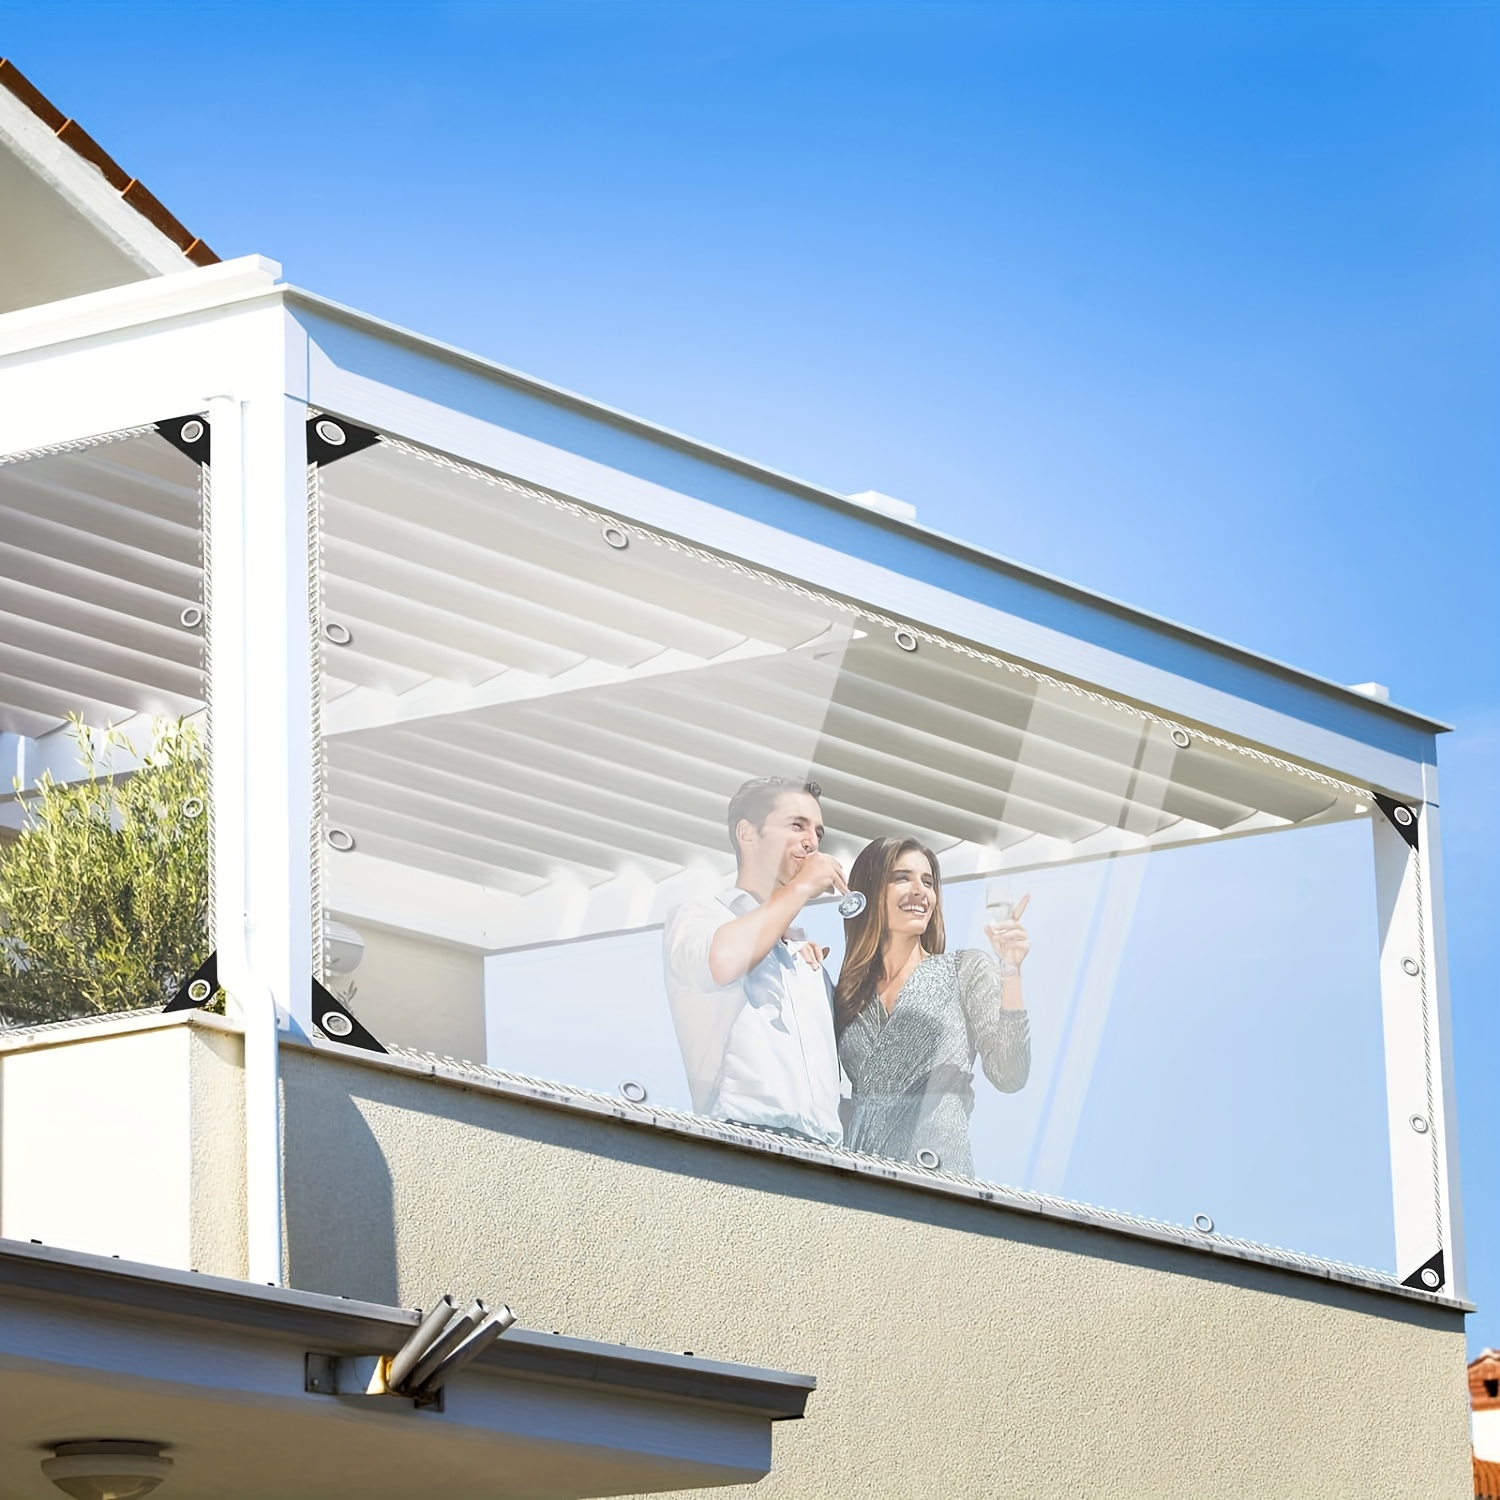 Lona transparente de PVC impermeable de 6.6 x 6.6 ft, con ojales, cubierta  gruesa para caravana, hoja de lona resistente para jardín, al aire libre